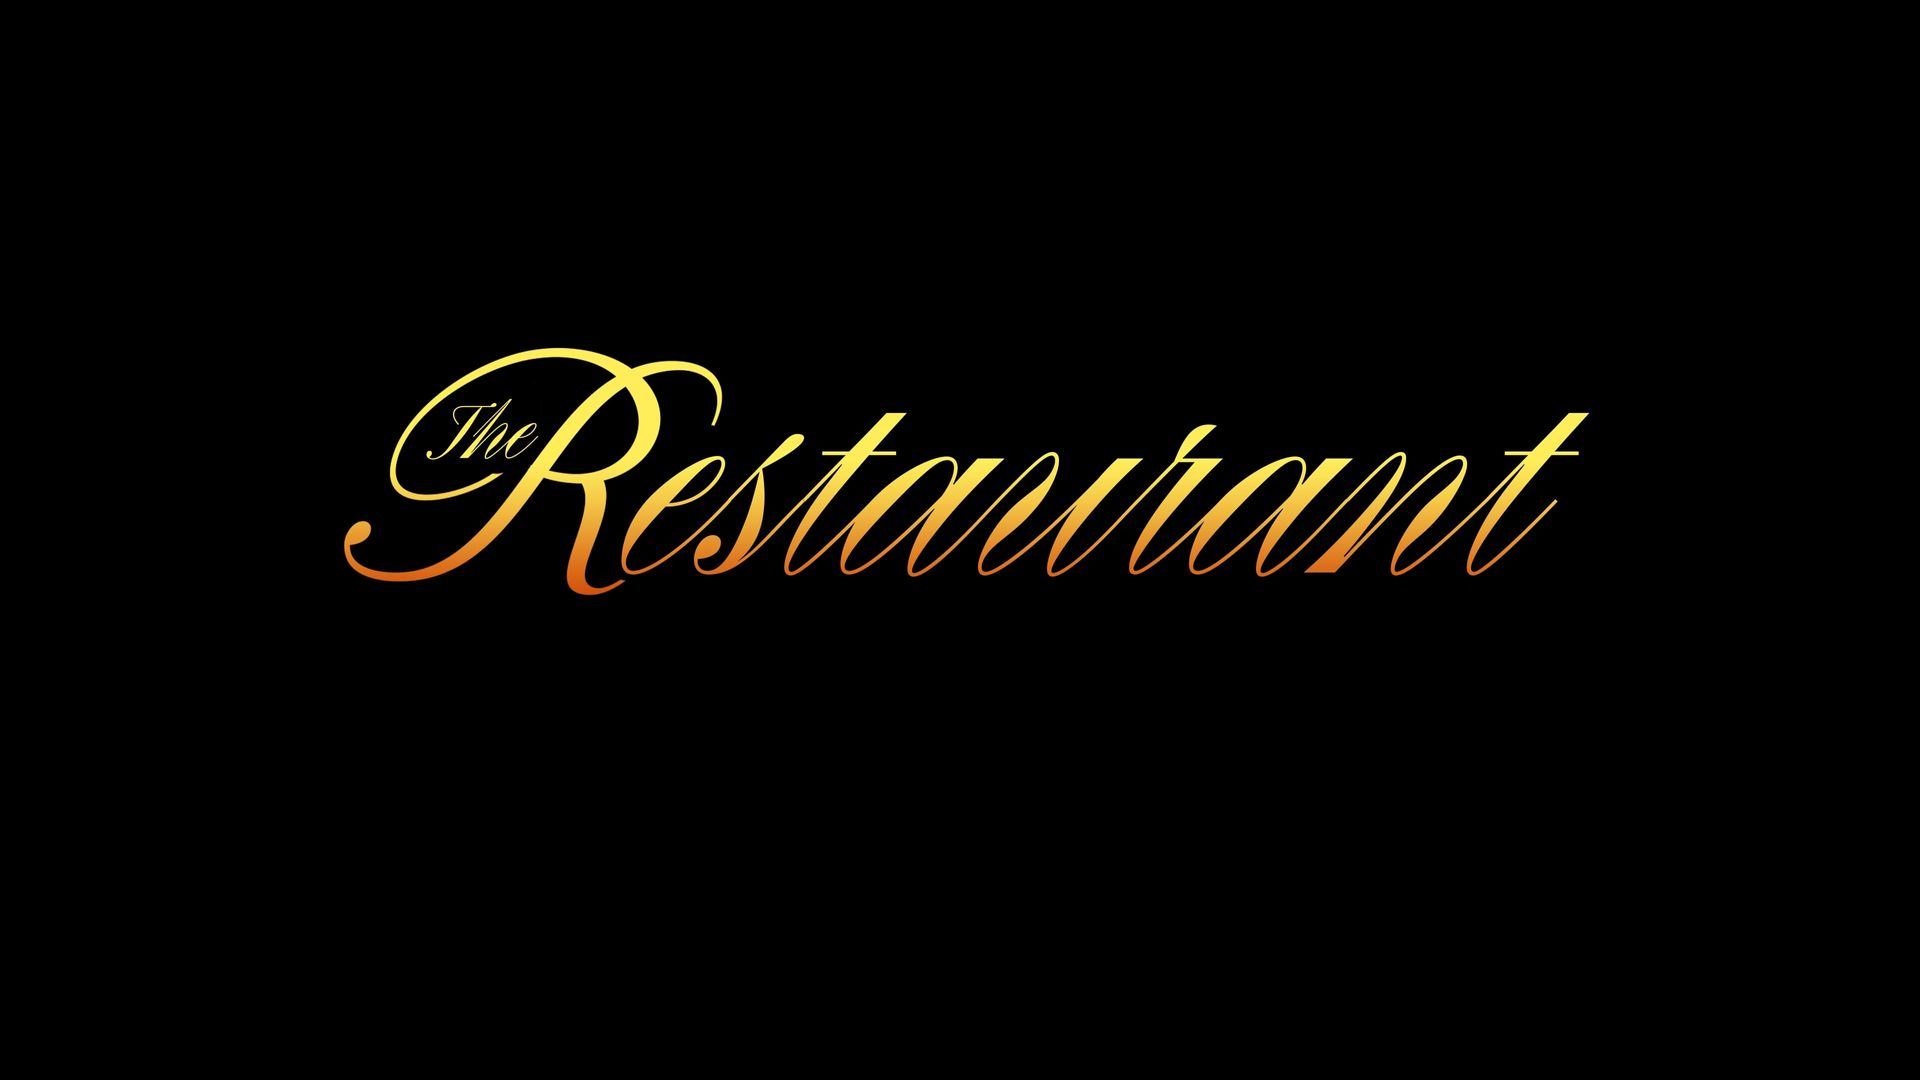 The Restaurant background